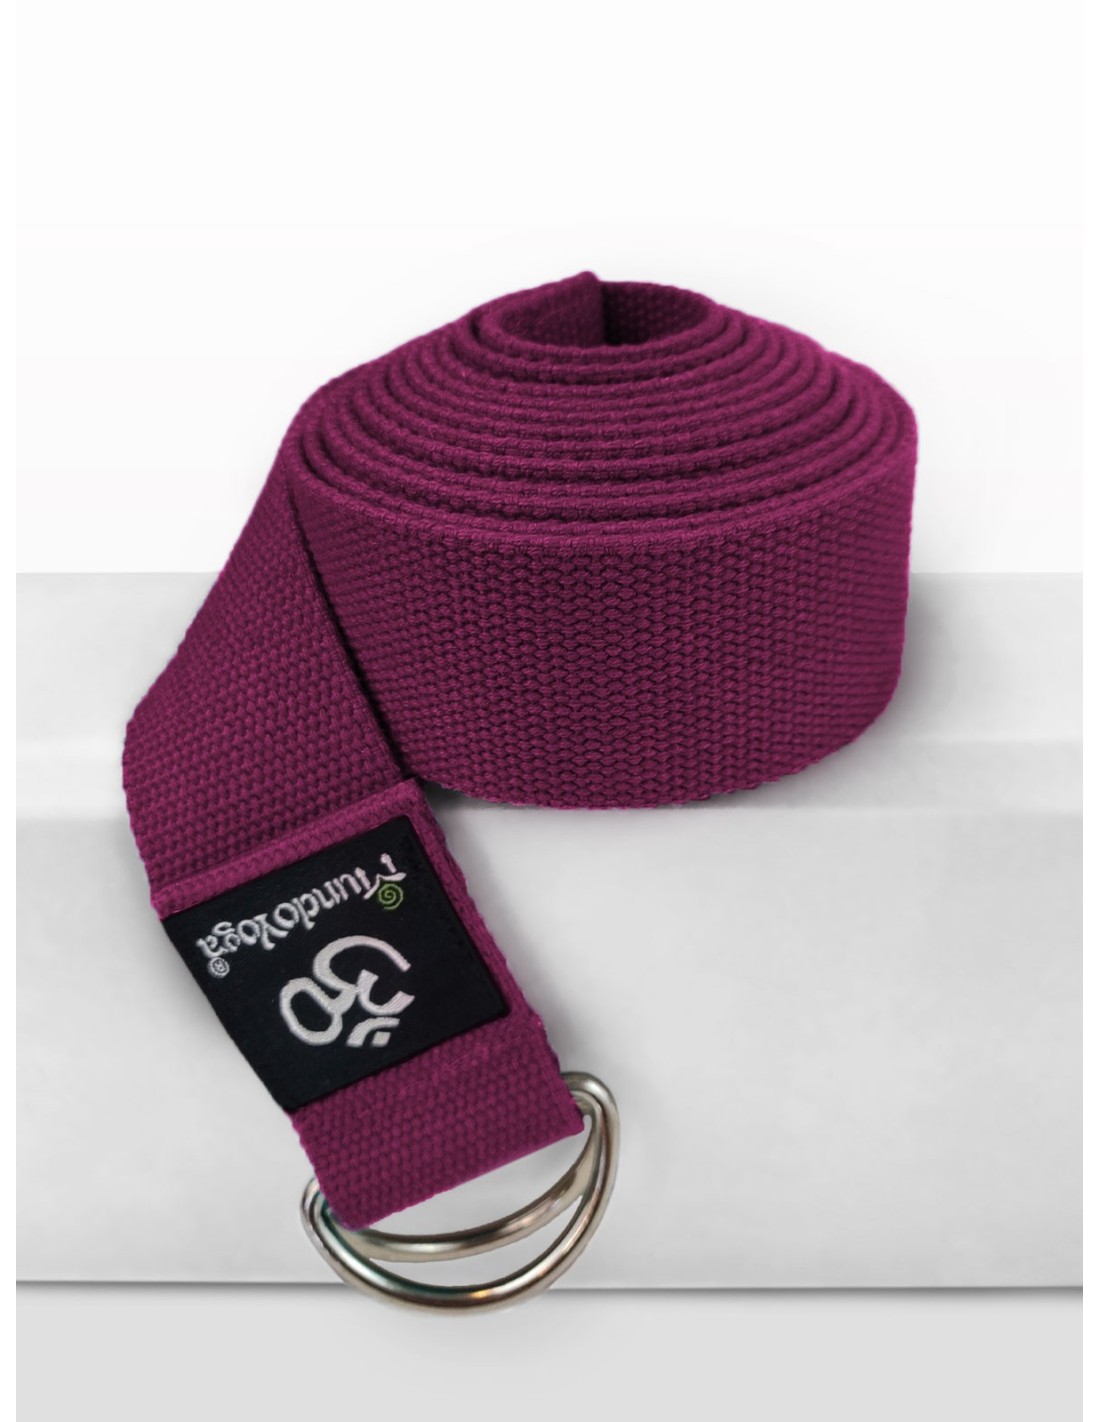 10' Cinch Buckle Cotton Yoga Strap – Yoga Accessories